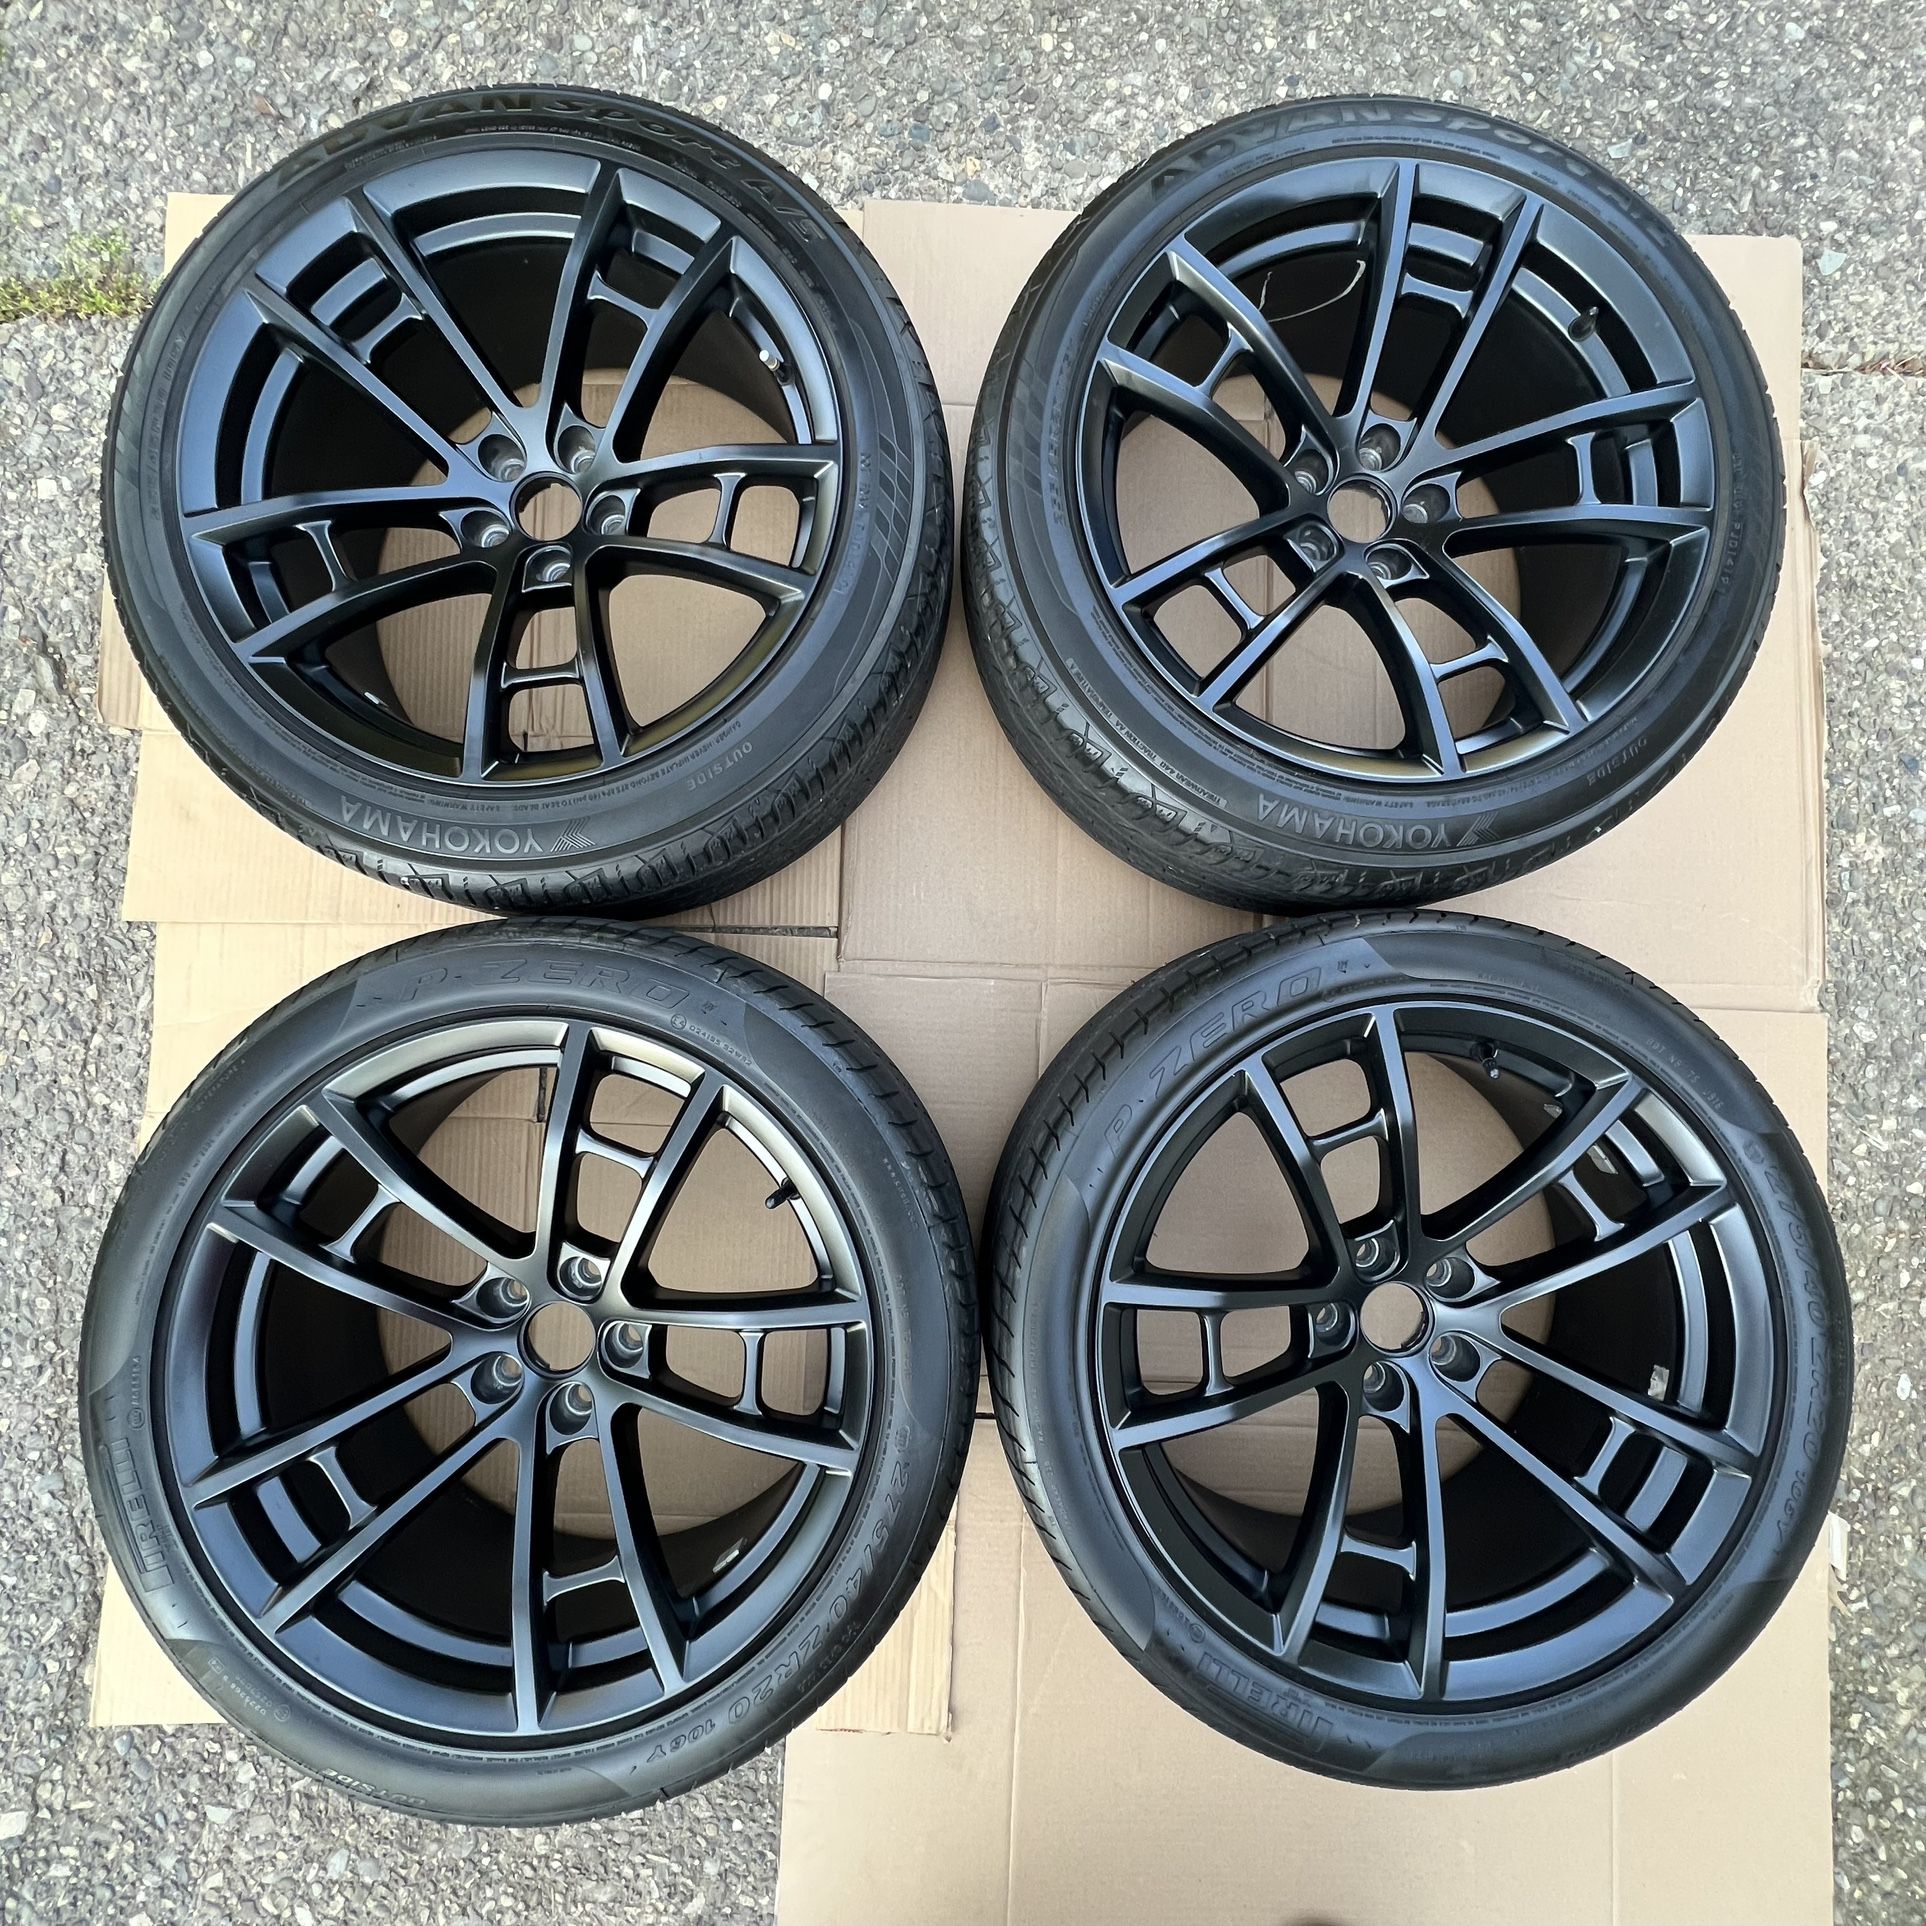 OEM Dodge Wheels Rims Scat Pack Hellcat Daytona SRT Black Dynamic Matte Black Tires 20”X9.5” 5X115